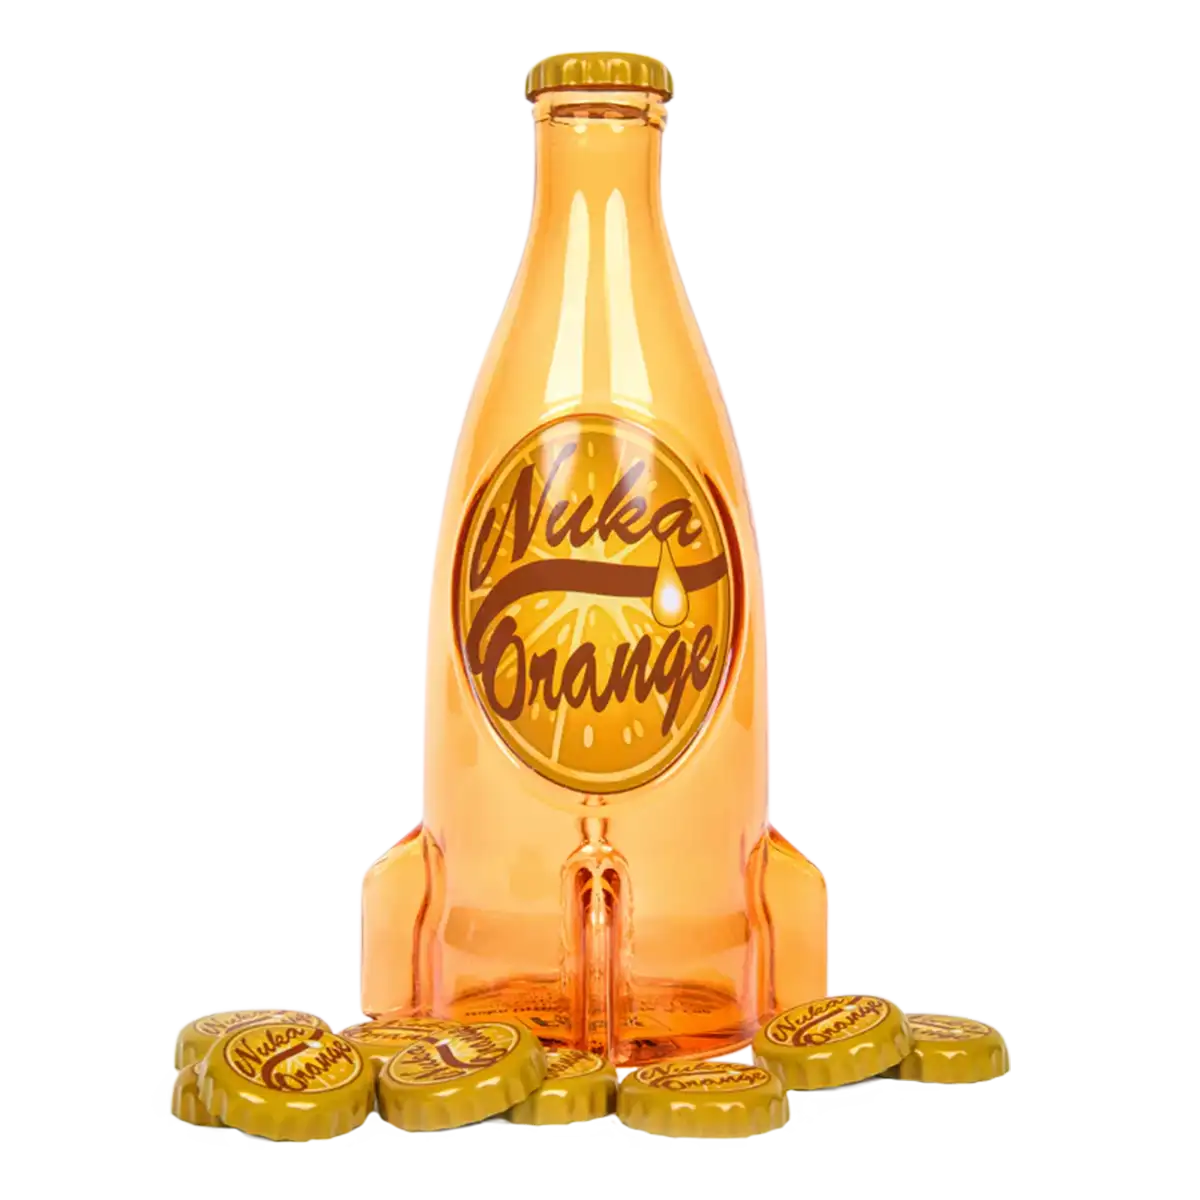 Fallout "Nuka Cola Orange" Glass Bottle and Caps Cover